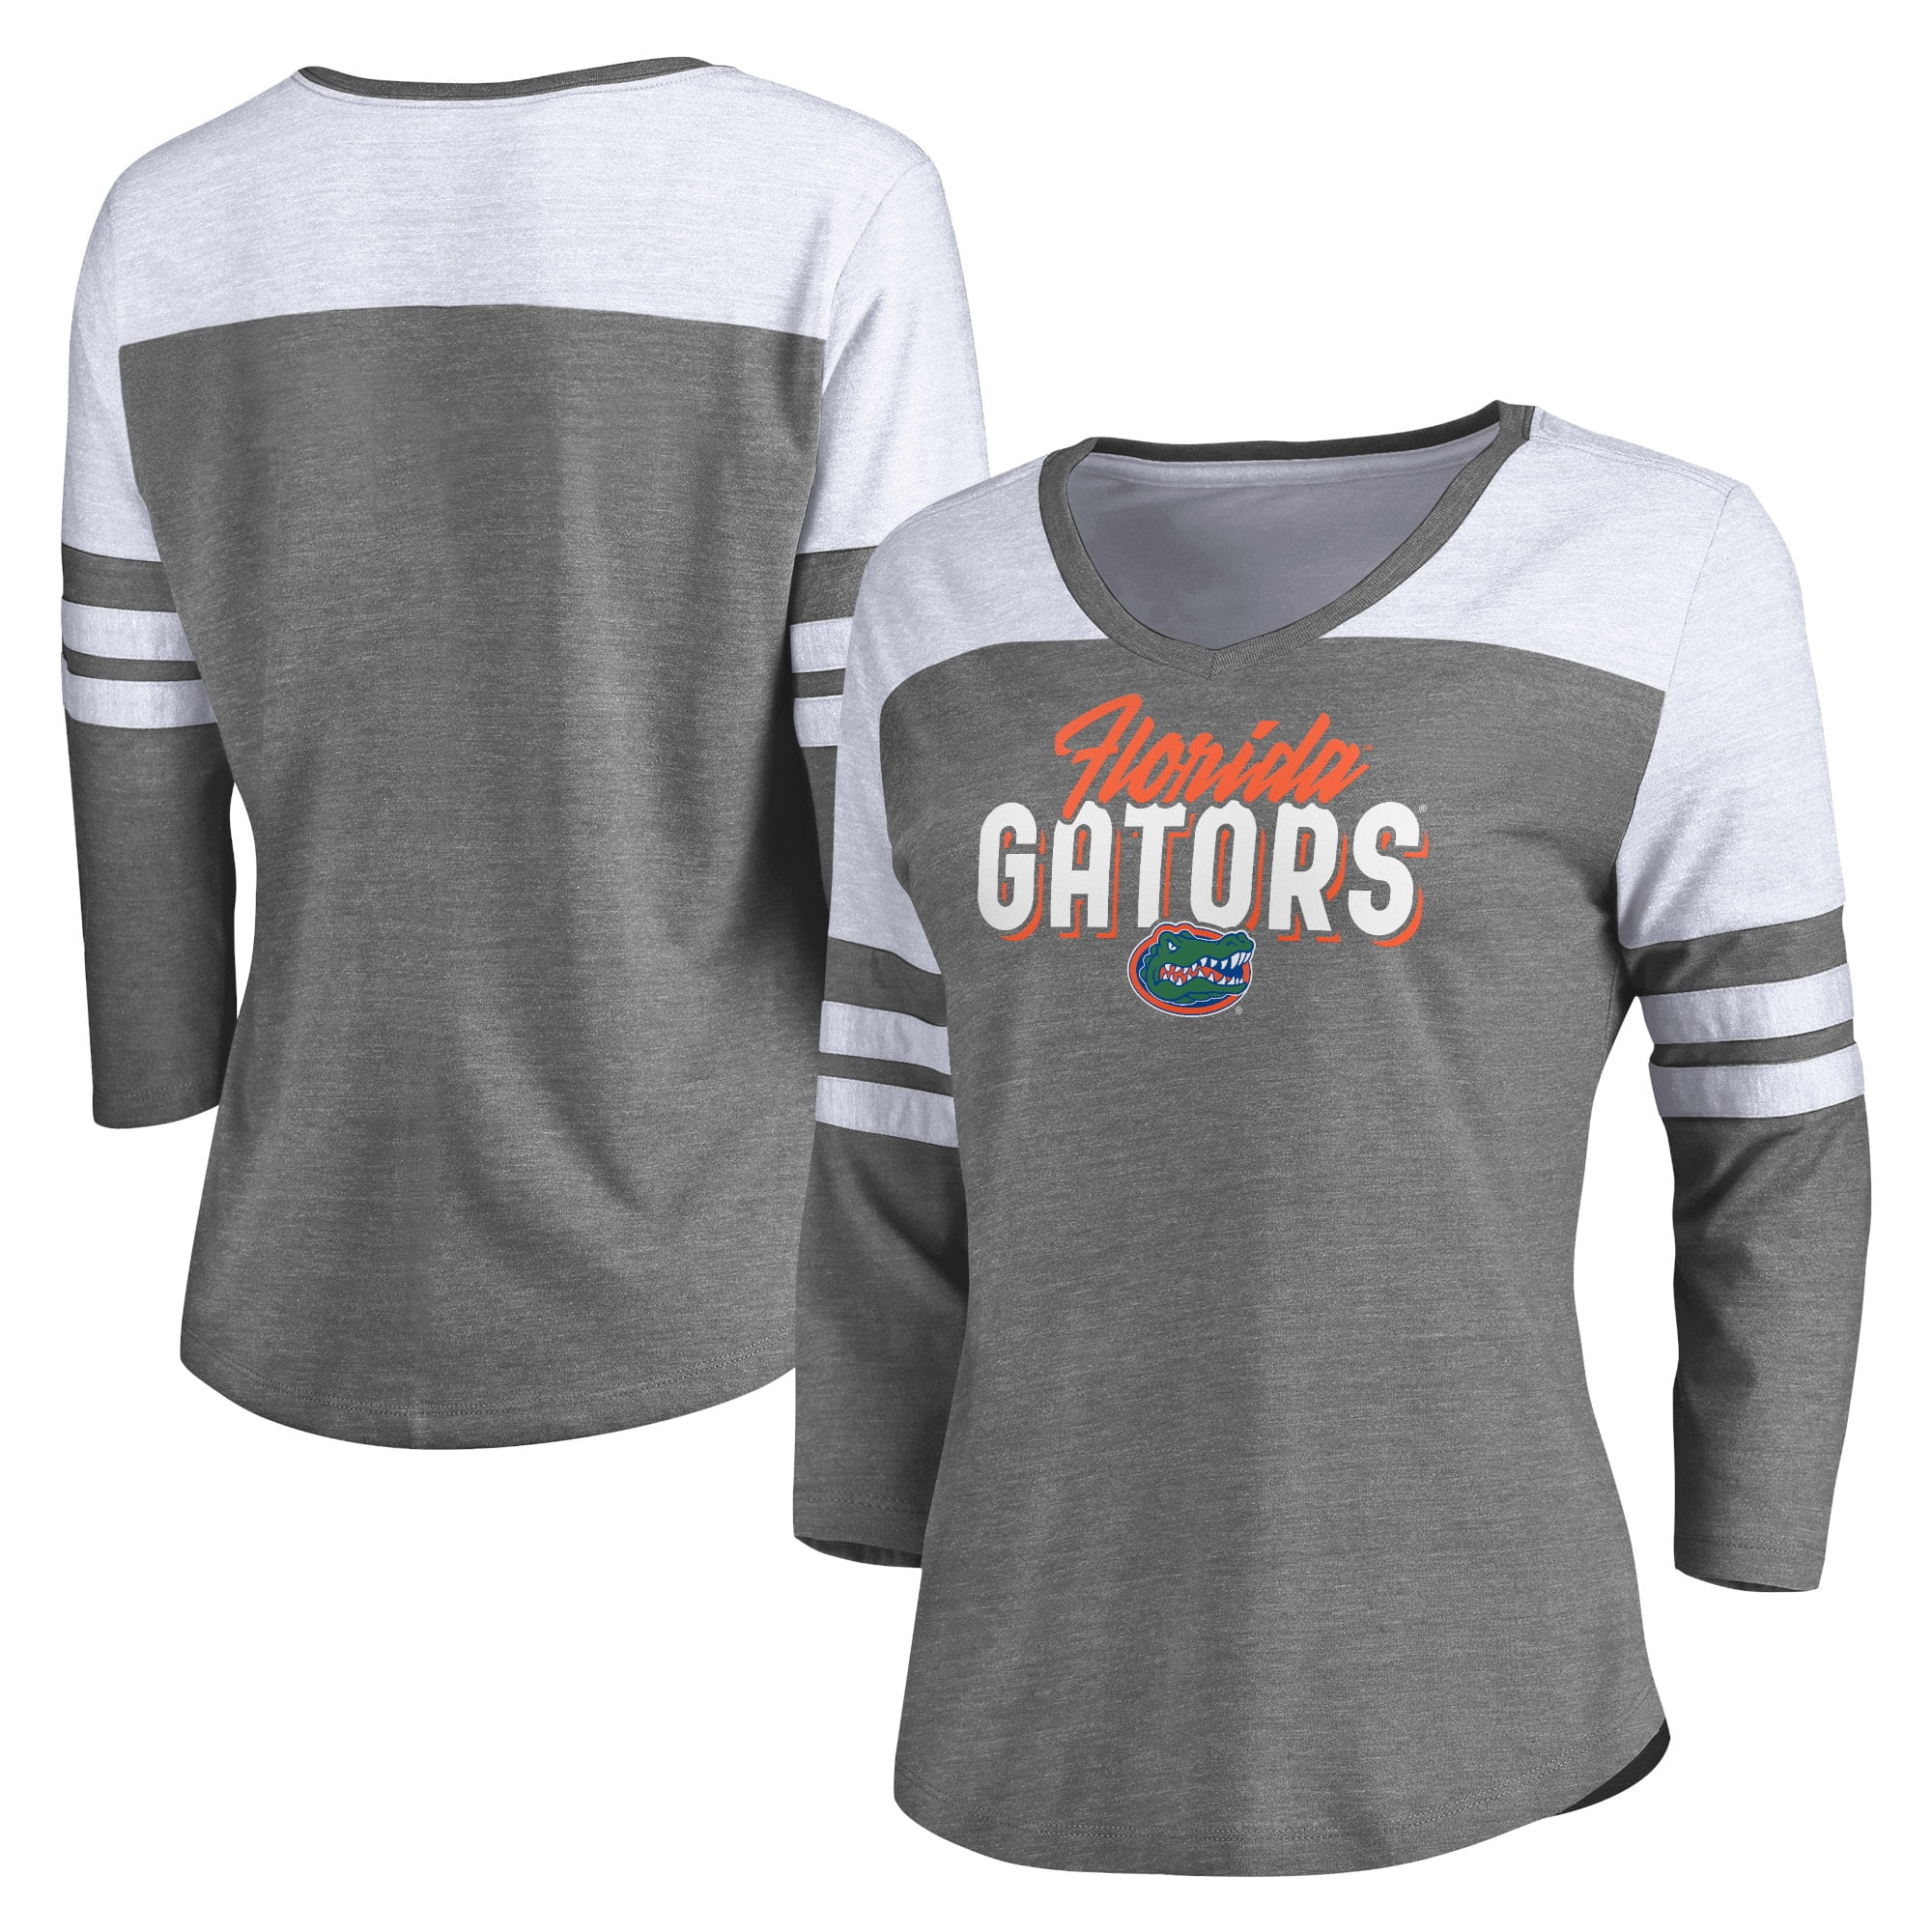 Women's Fanatics Branded Heathered Gray/White Florida Gators Hustle 3/4 ...